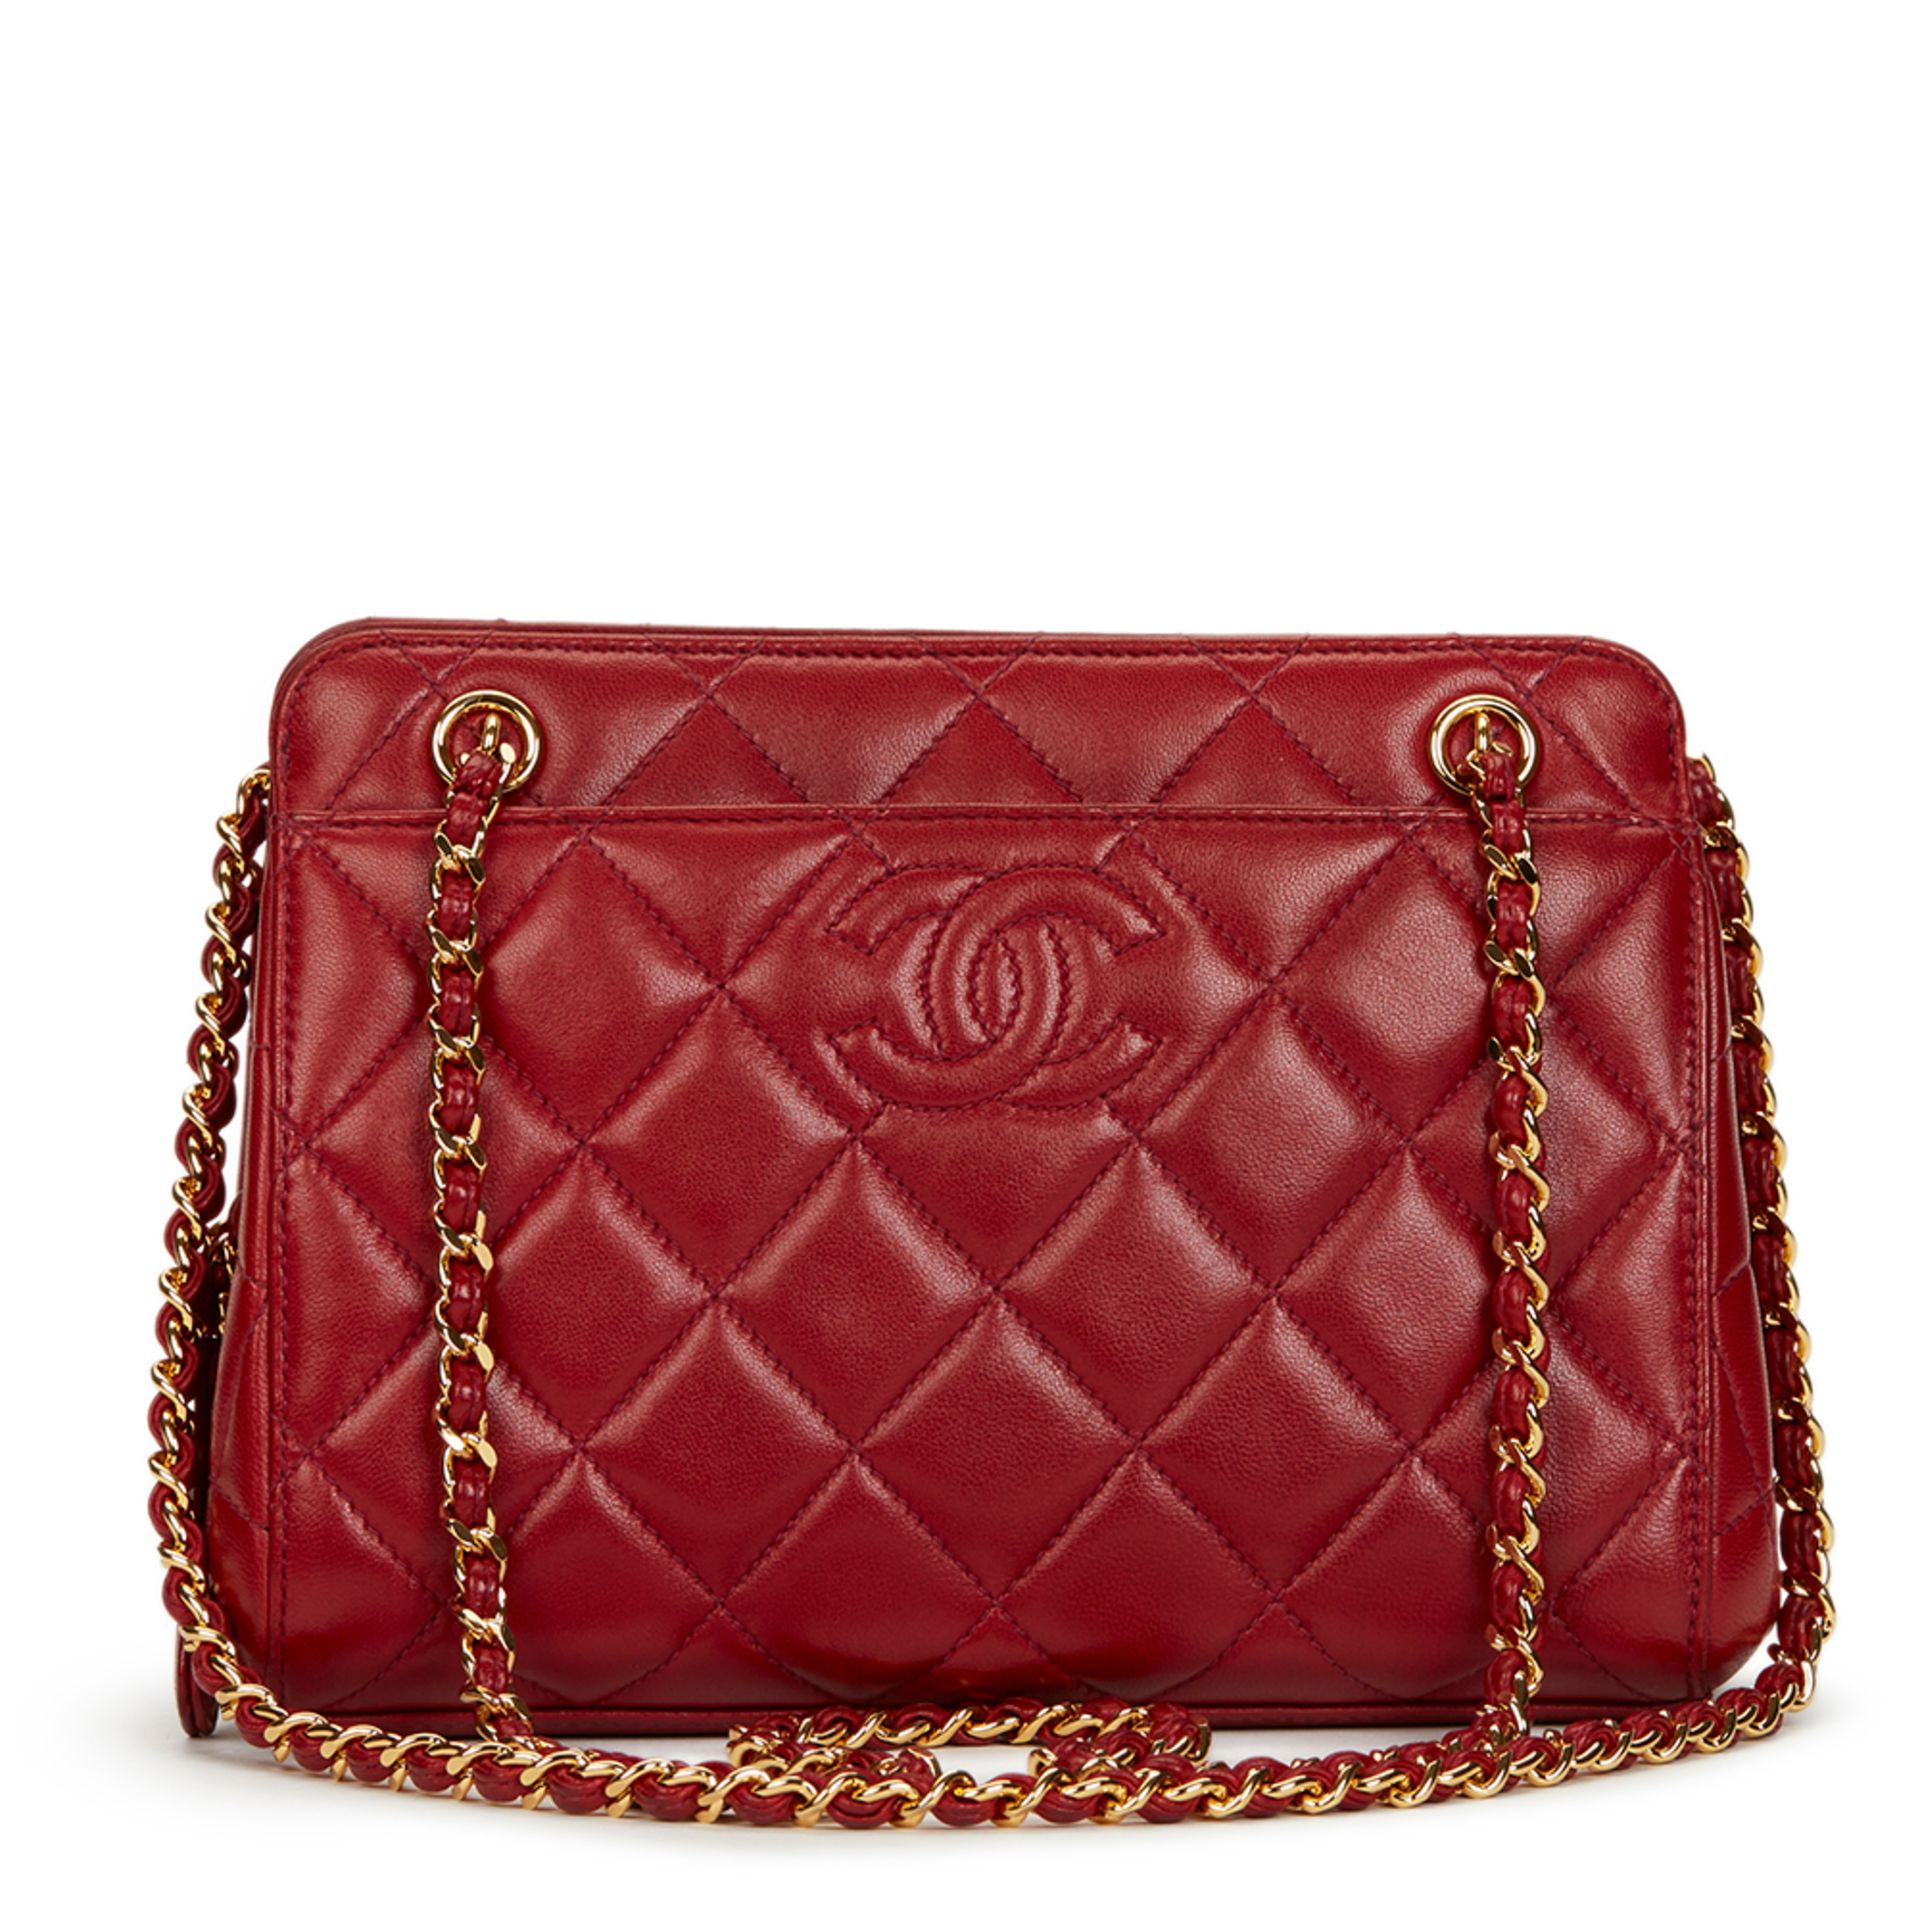 Chanel Timeless Frame Bag - Image 2 of 16